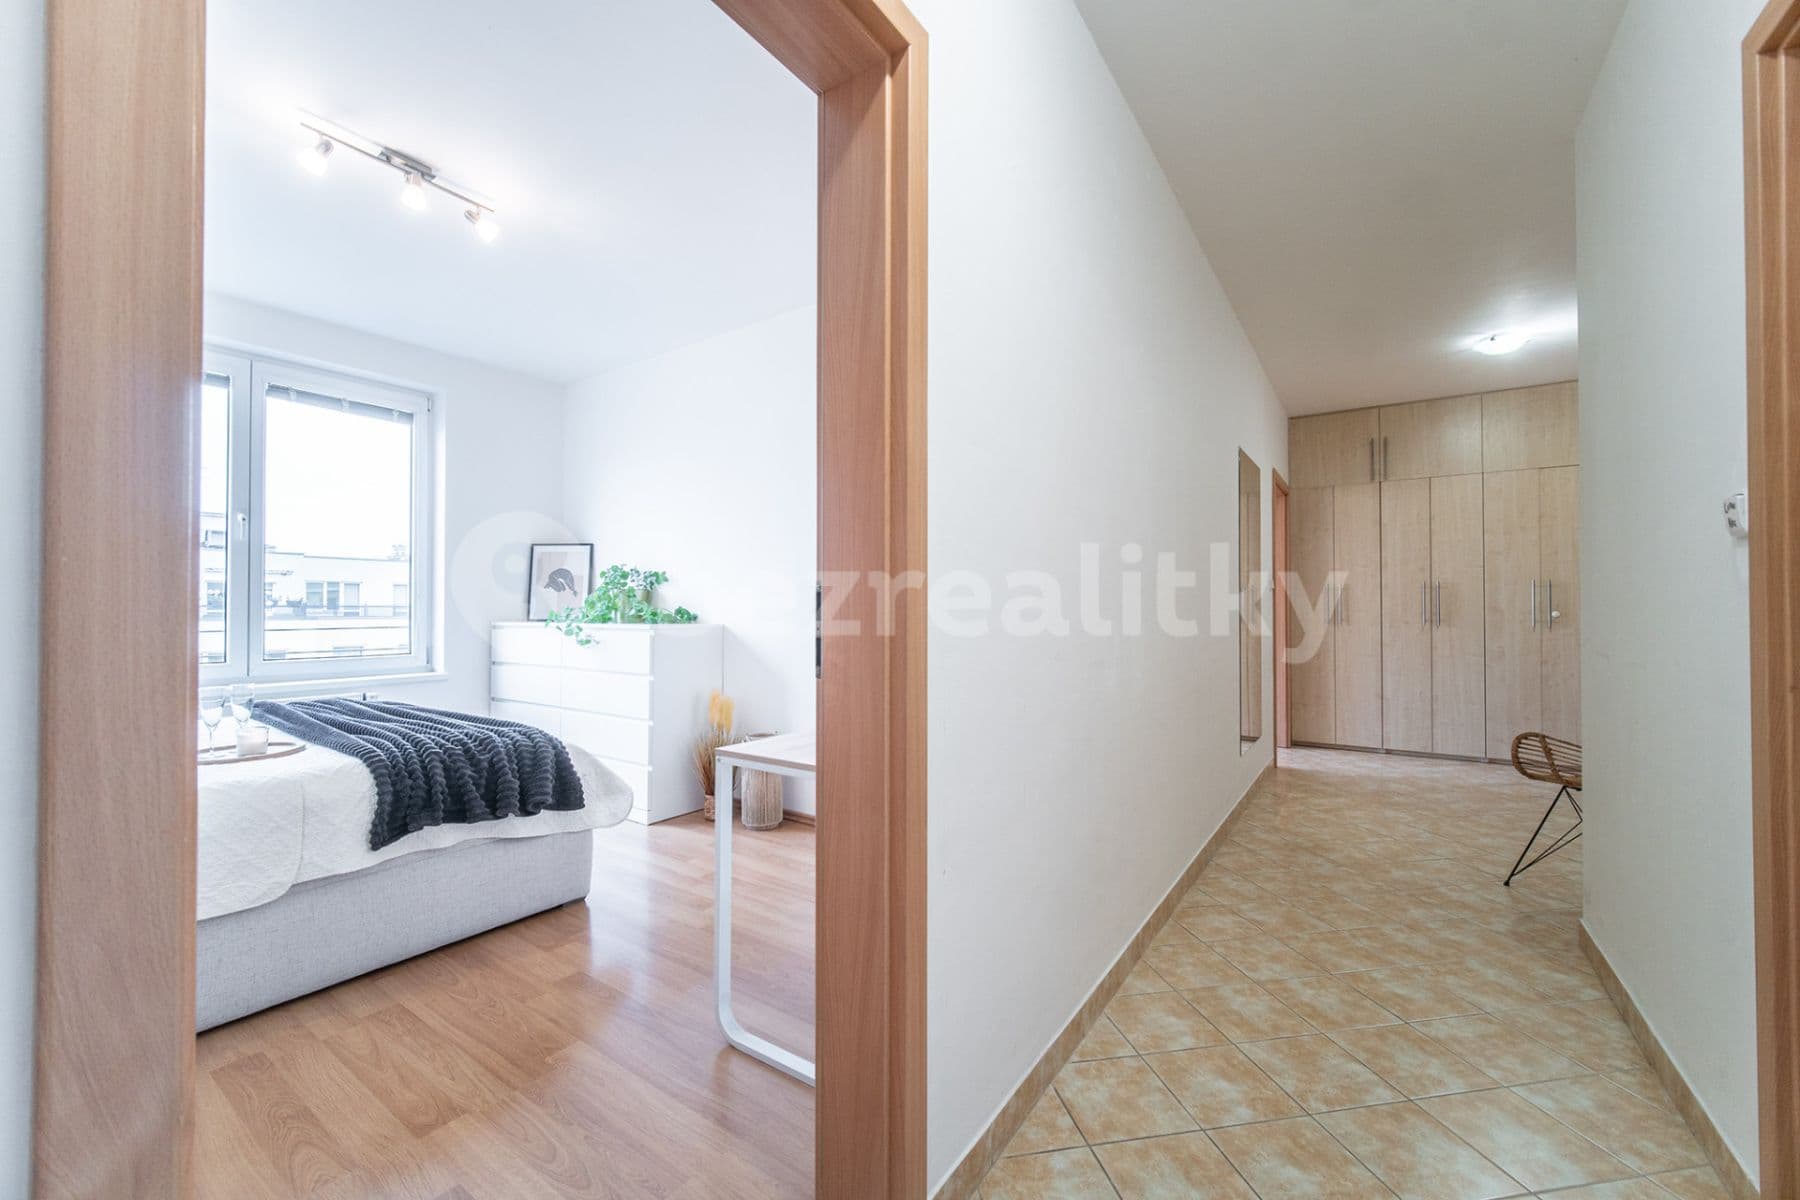 2 bedroom with open-plan kitchen flat for sale, 96 m², Wassermannova, Prague, Prague